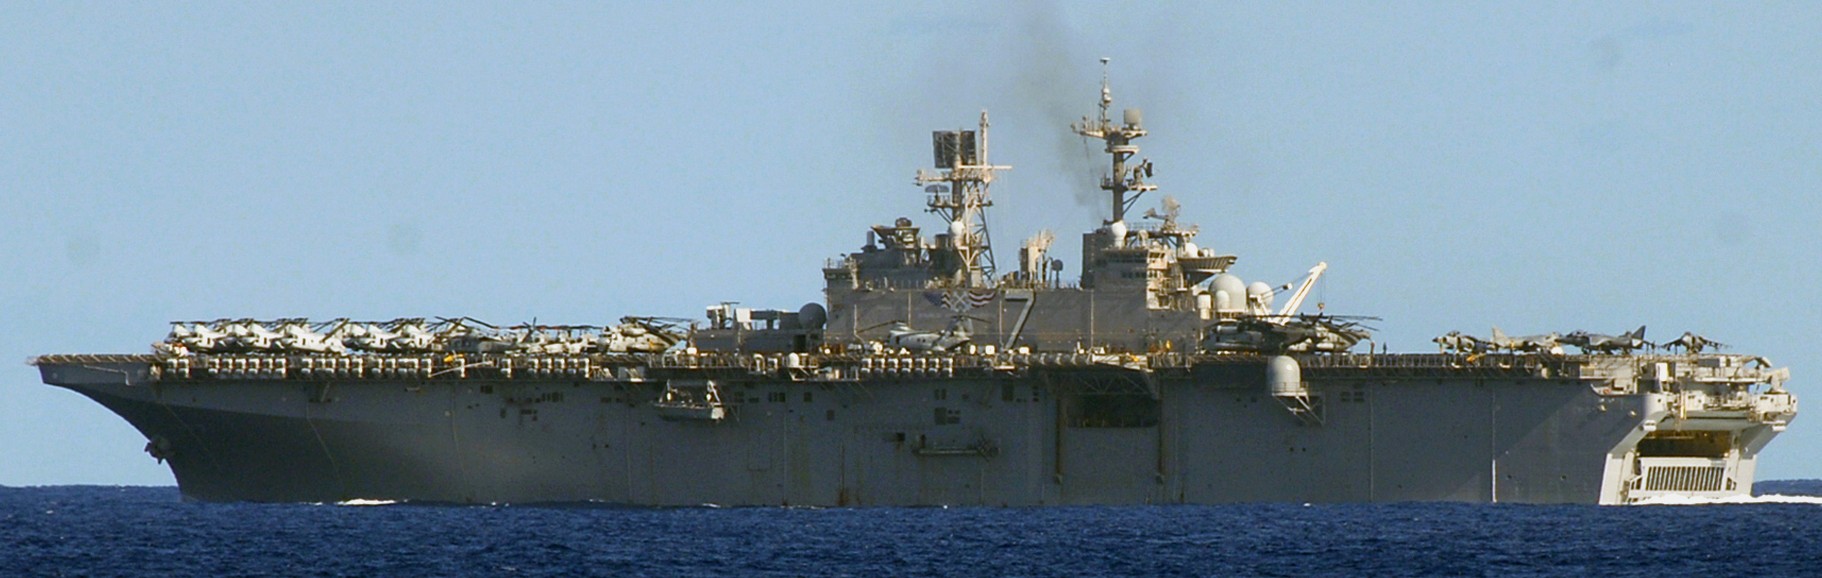 lhd-7 uss iwo jima wasp class amphibious assault ship dock landing helicopter us navy hmm-264 marines 41